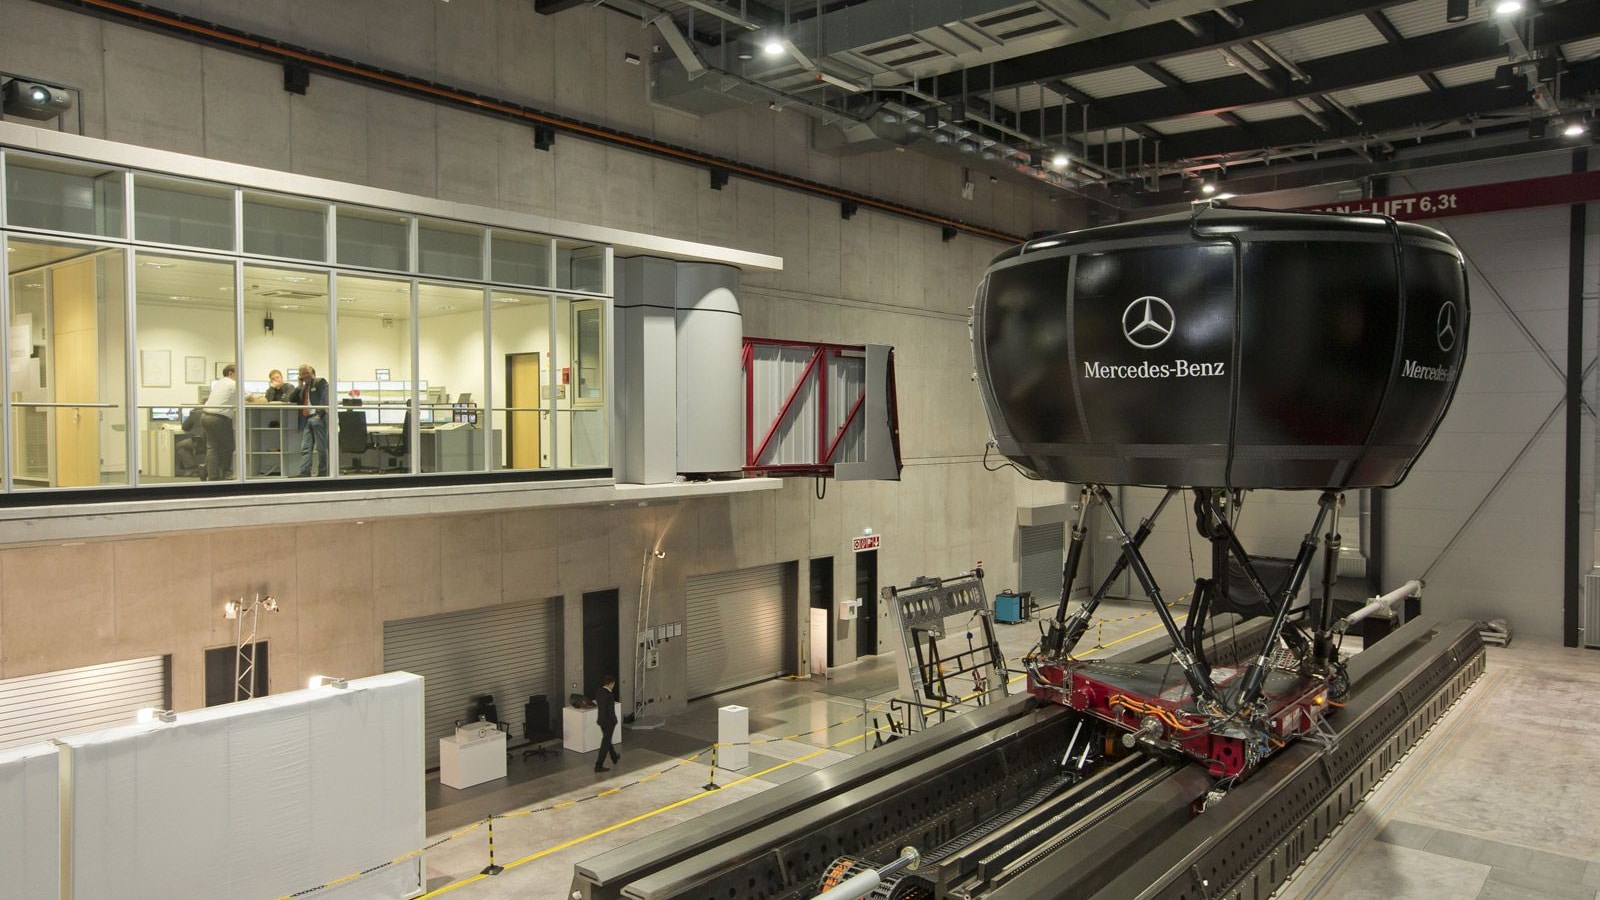 Mercedes-Benz vehicle simulation center